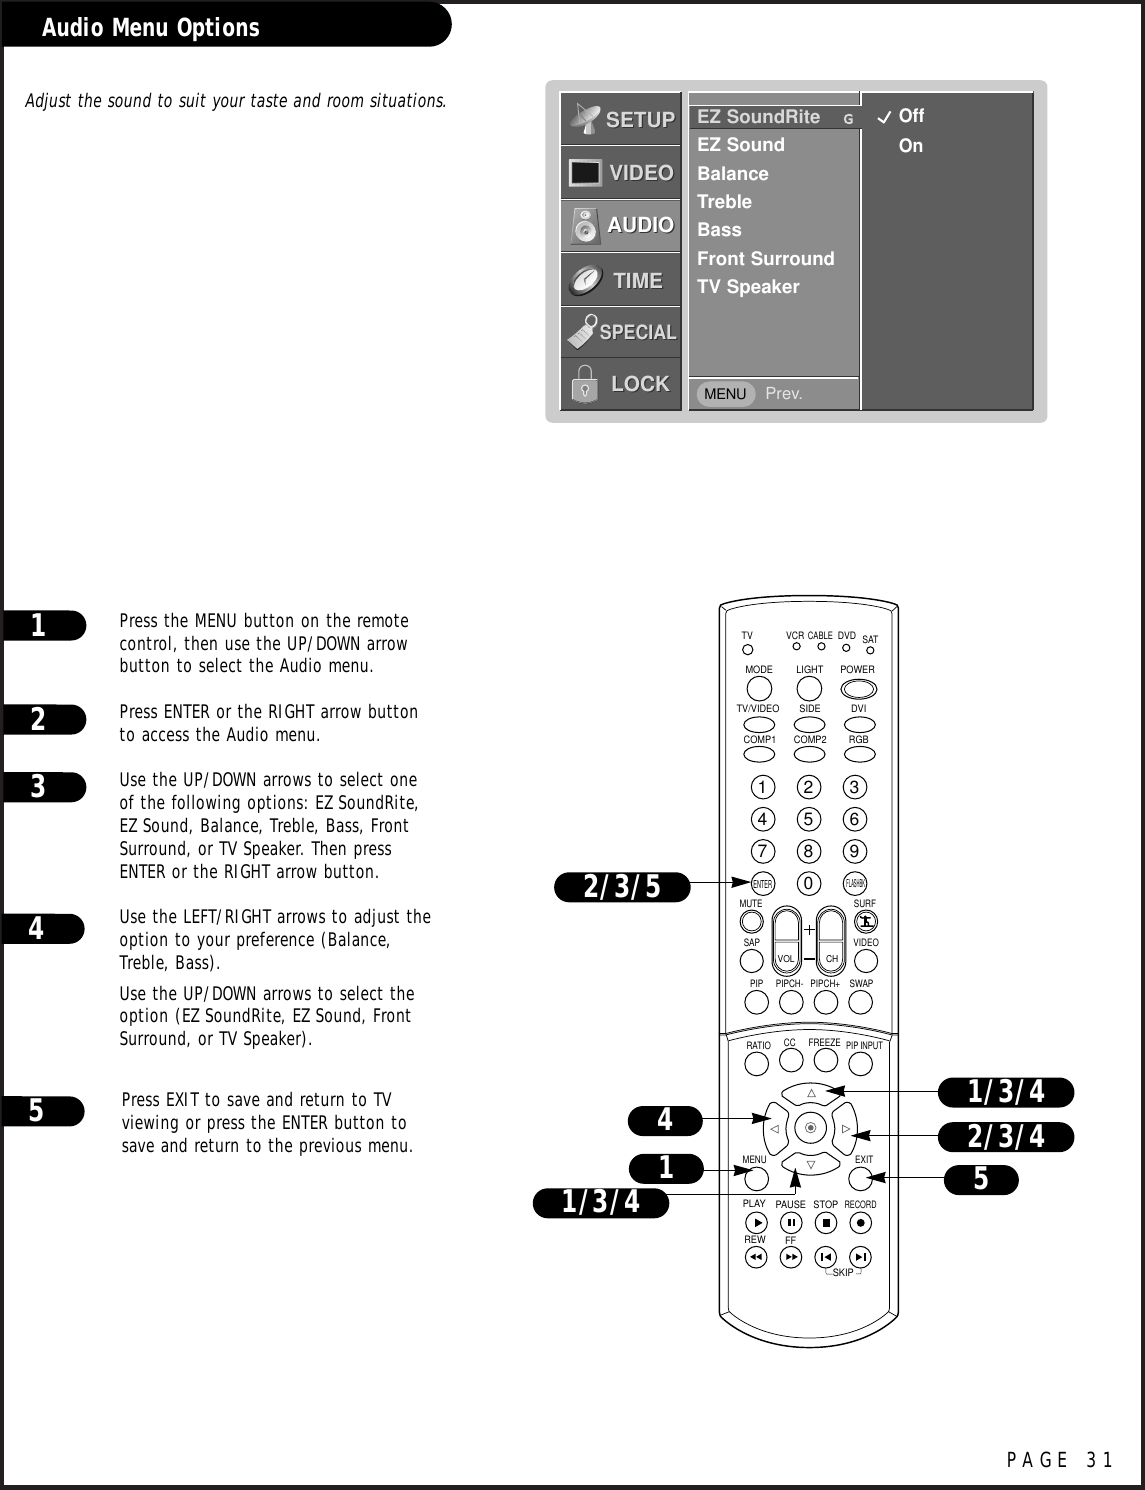 PAGE 31Audio Menu OptionsPress the MENU button on the remotecontrol, then use the UP/DOWN arrowbutton to select the Audio menu.Press ENTER or the RIGHT arrow buttonto access the Audio menu.Use the UP/DOWN arrows to select oneof the following options: EZ SoundRite,EZ Sound, Balance, Treble, Bass, FrontSurround, or TV Speaker. Then pressENTER or the RIGHT arrow button.Use the LEFT/RIGHT arrows to adjust theoption to your preference (Balance,Treble, Bass).Use the UP/DOWN arrows to select theoption (EZ SoundRite, EZ Sound, FrontSurround, or TV Speaker).Press EXIT to save and return to TVviewing or press the ENTER button tosave and return to the previous menu.123Adjust the sound to suit your taste and room situations. 45EZ SoundRite    GEZ SoundBalanceTrebleBassFront SurroundTV SpeakerPrev.SETUPSETUPVIDEOVIDEOAUDIOAUDIOTIMETIMELOCKLOCKSPECIALSPECIAL1234567890TVMODE LIGHT POWER   TV/VIDEO DVIRGBVCRCABLEDVD SATMUTESWAPPIPCH- PIPCH+PIPRATIORECORDSTOPPAUSEREWPLAYFFMENU EXITCC FREEZEPIP INPUTVOL CHSURFSAP VIDEOCOMP2COMP1SIDESKIPENTERFLASHBK4512/3/52/3/41/3/41/3/4OffOnMENU